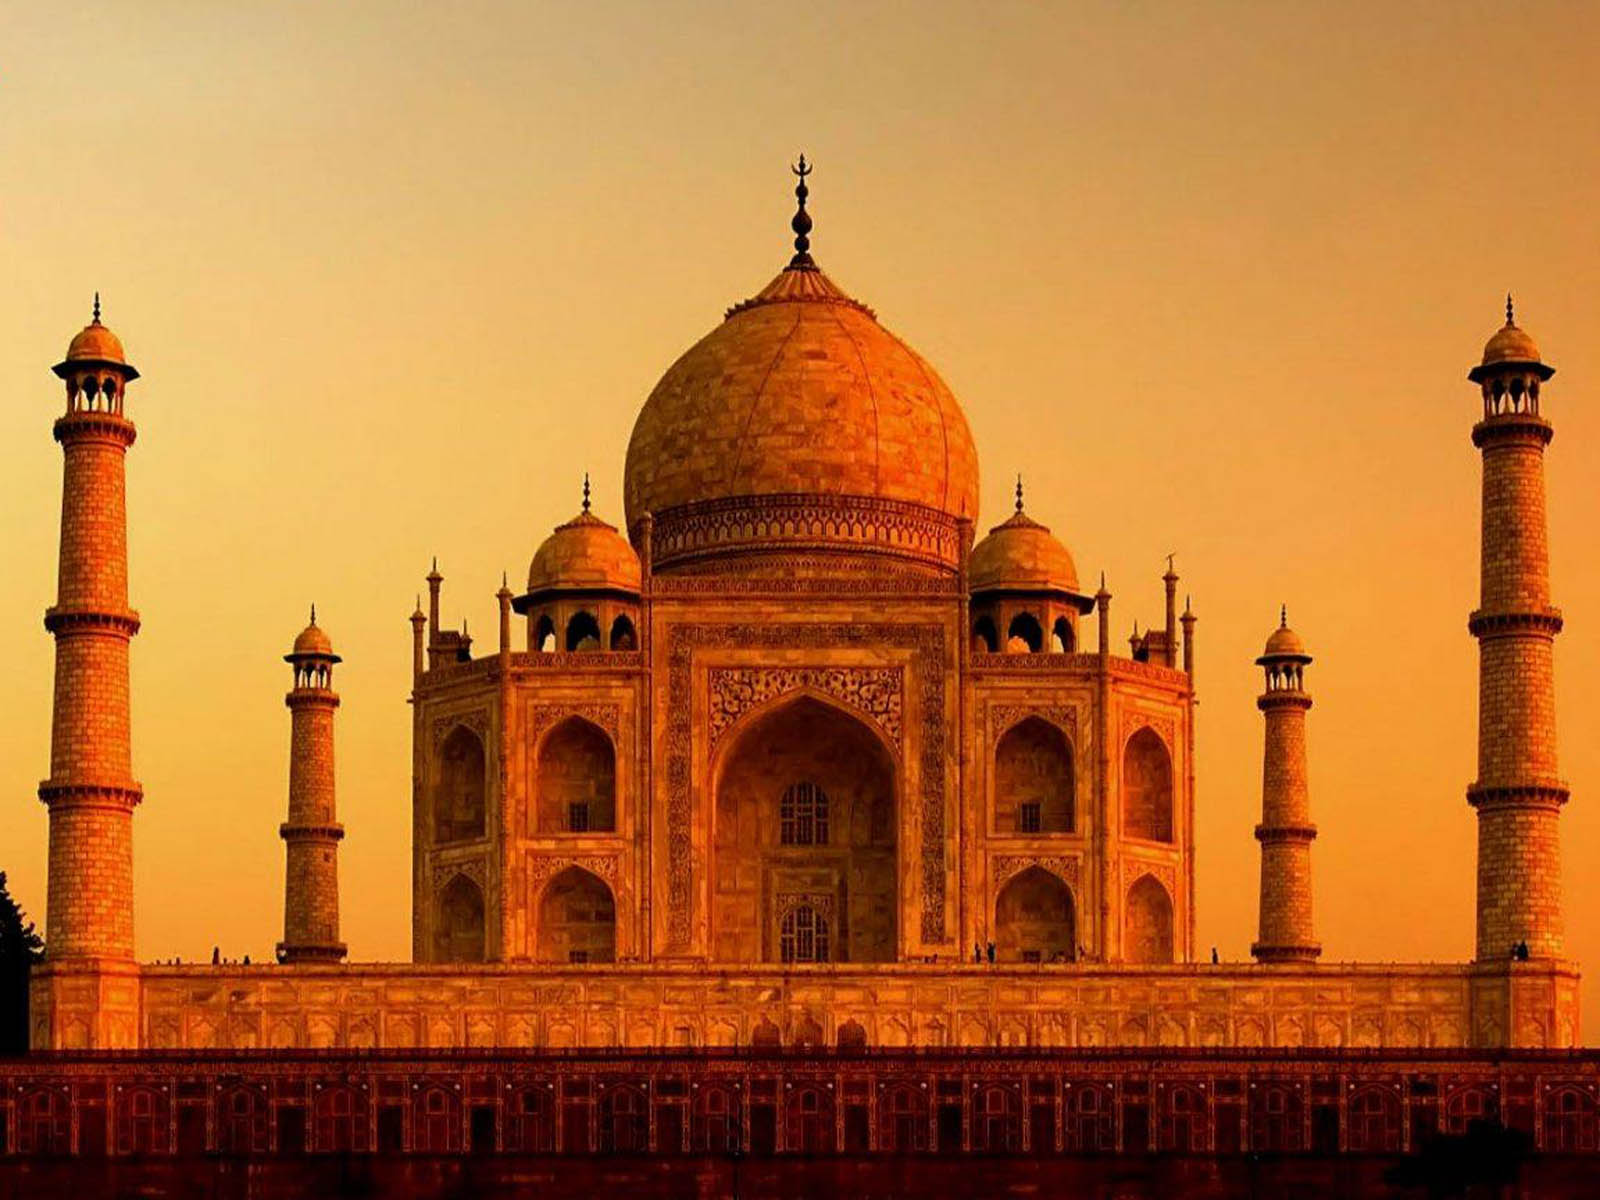 Taj Mahal, monument of India